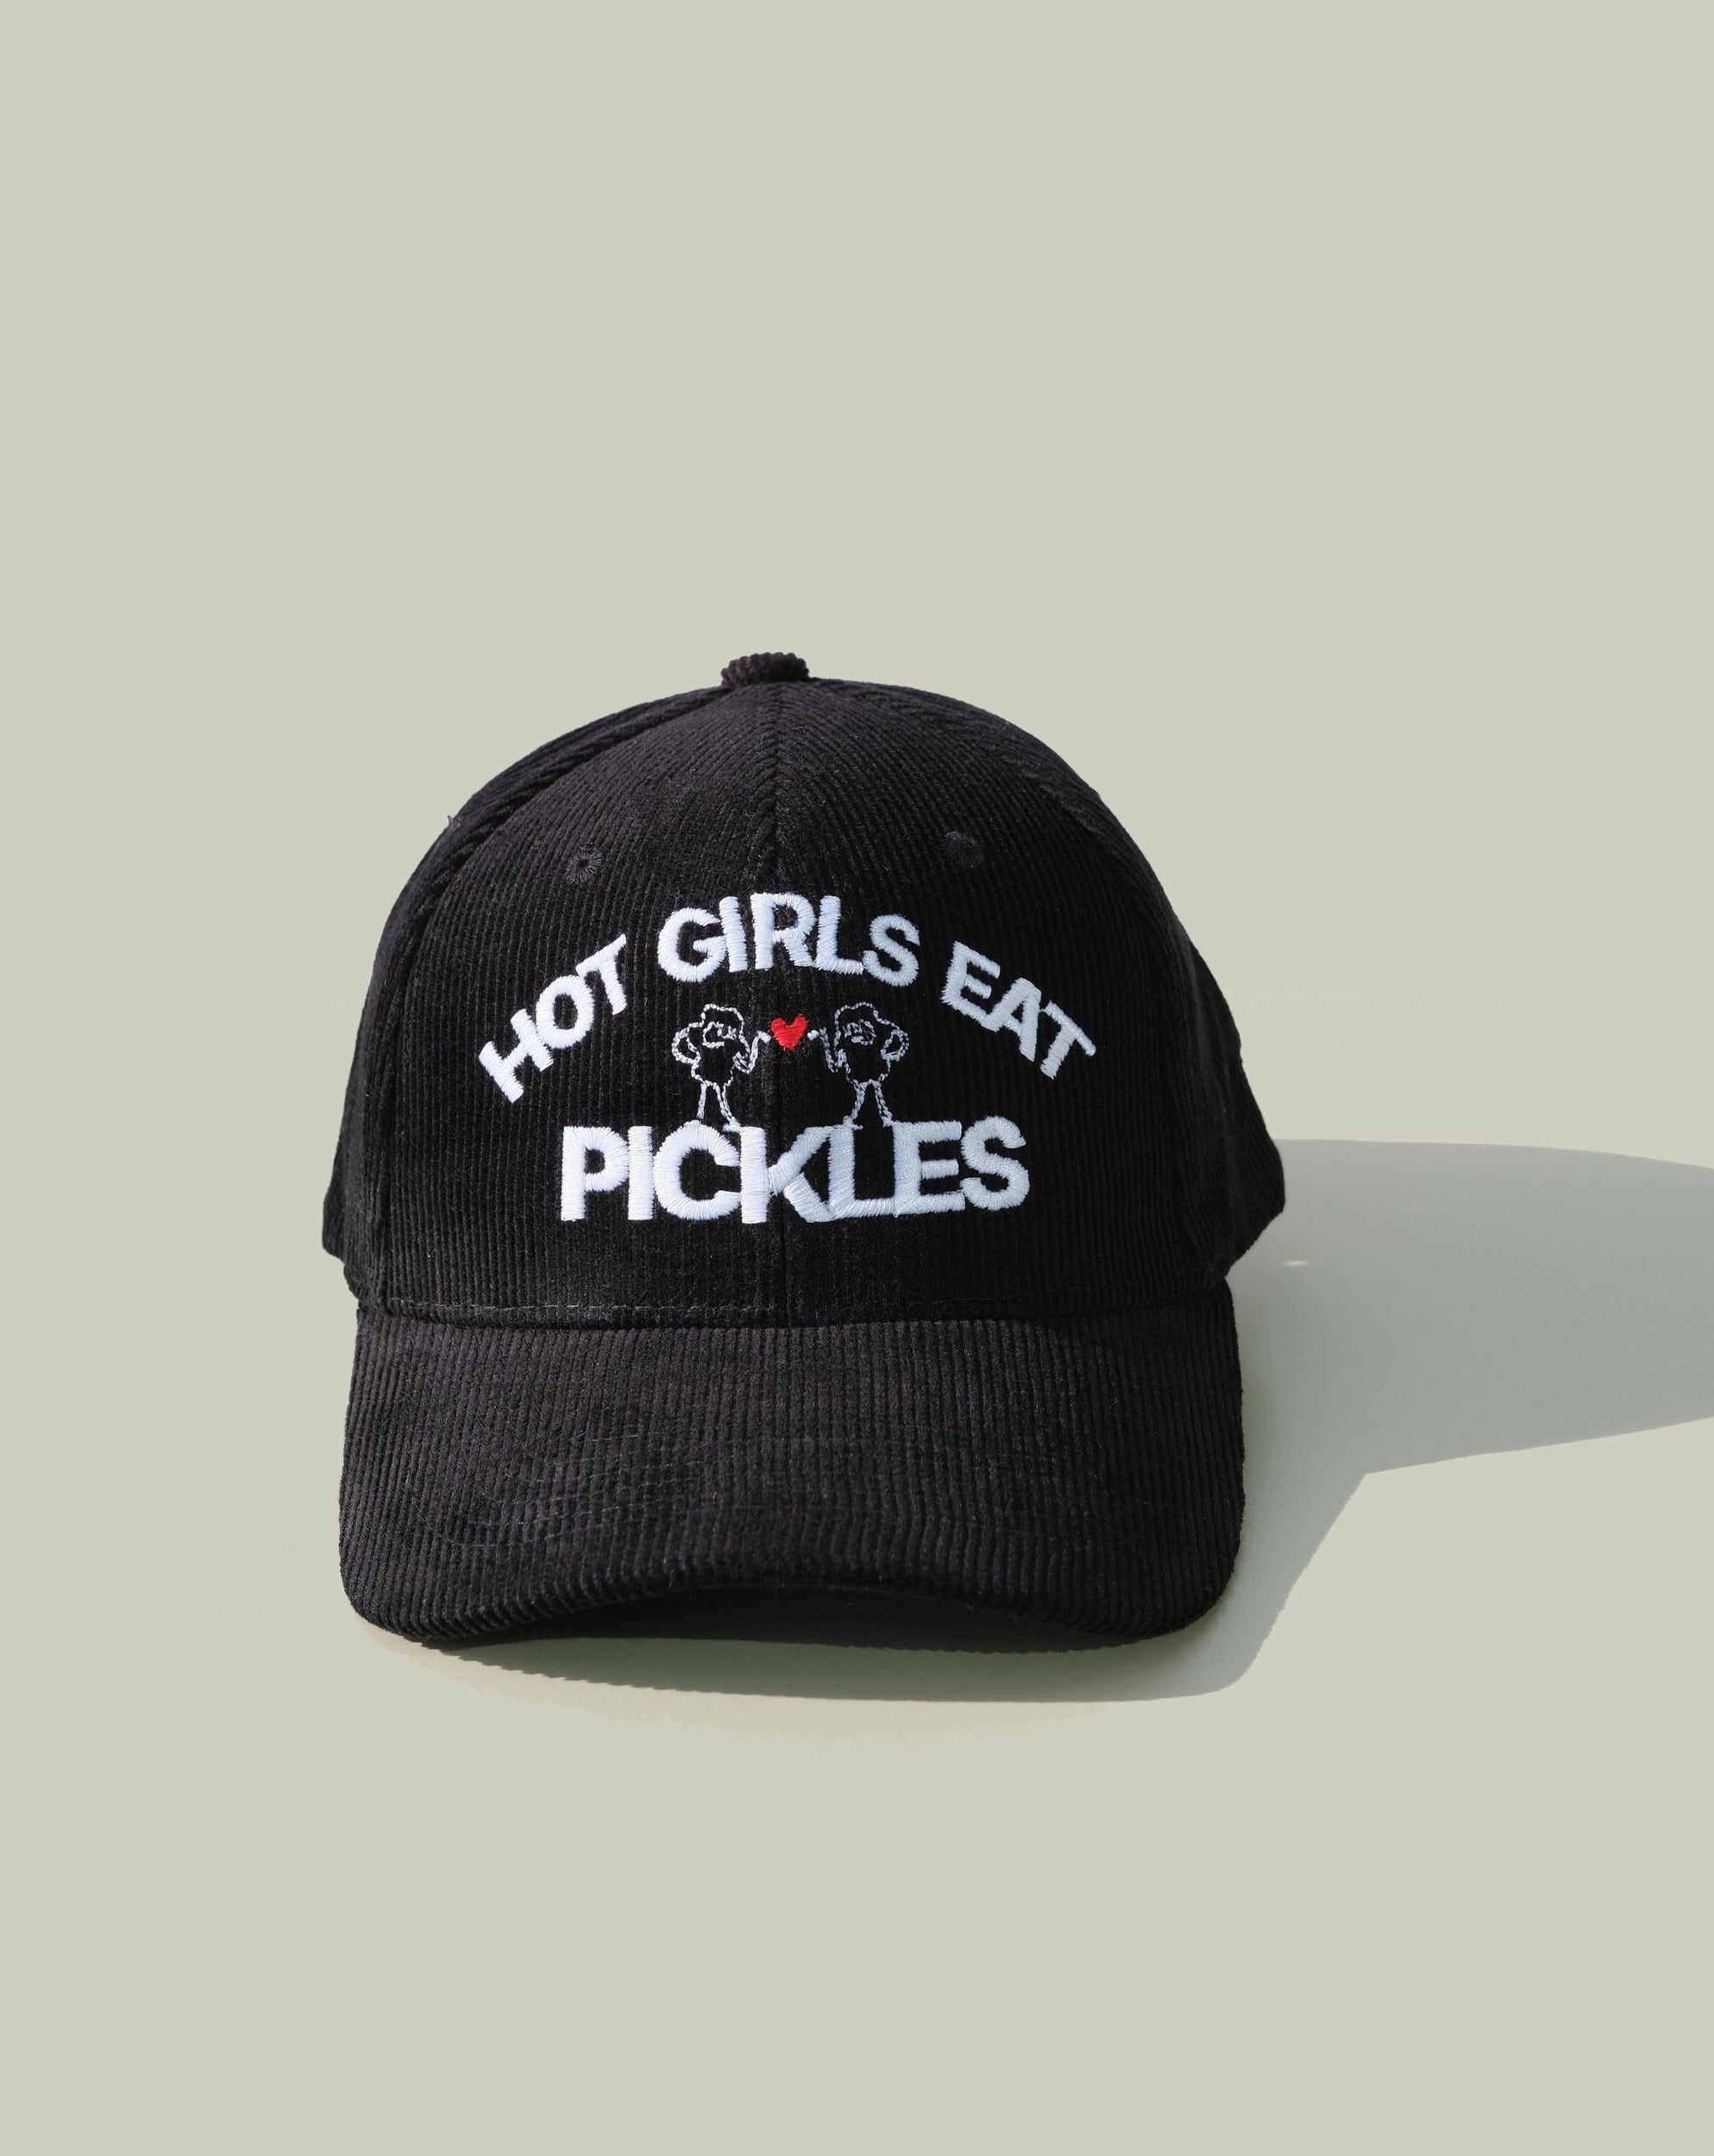 'hot girls eat pickles' – Corduroy Black Dad Hat